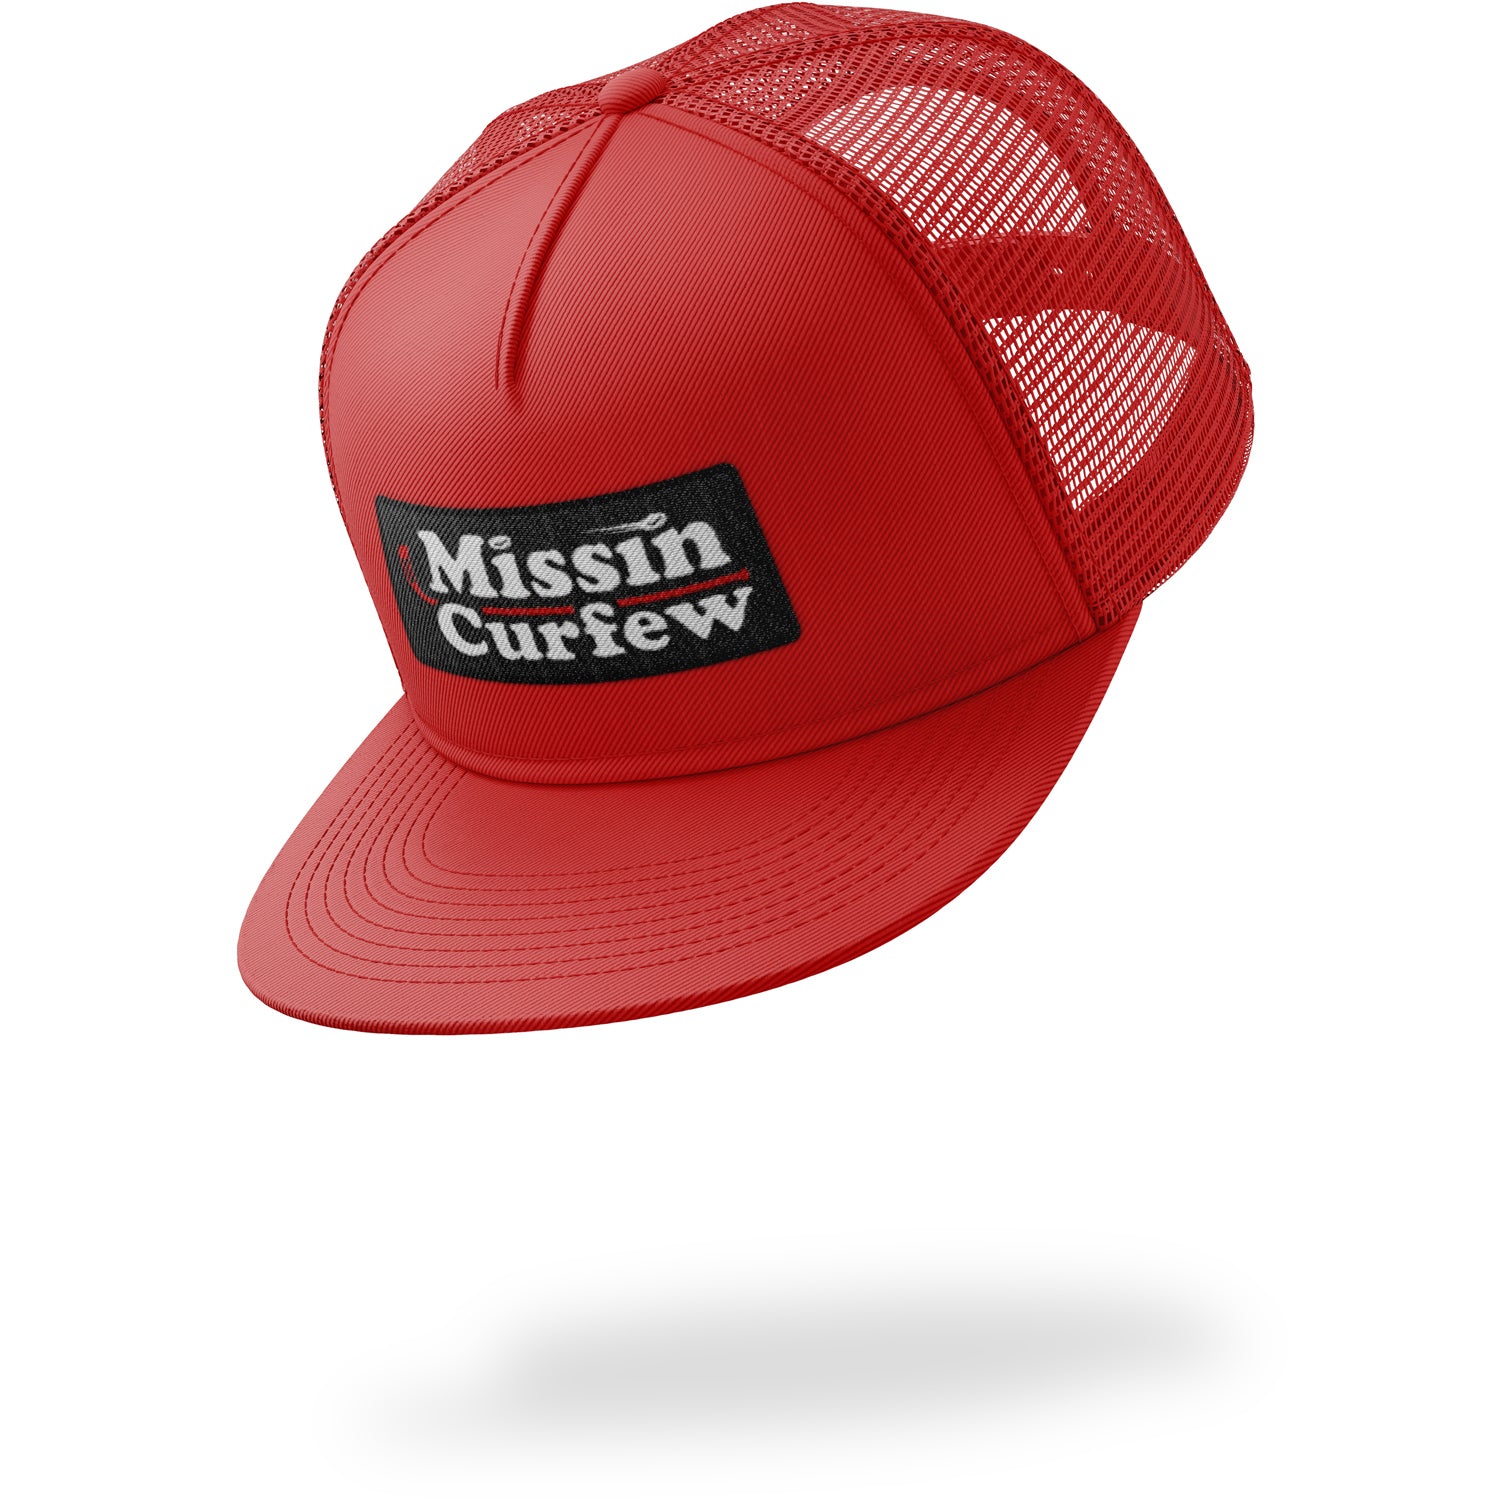 MISSIN CURFEW TOP TITTY BUCKET - RED